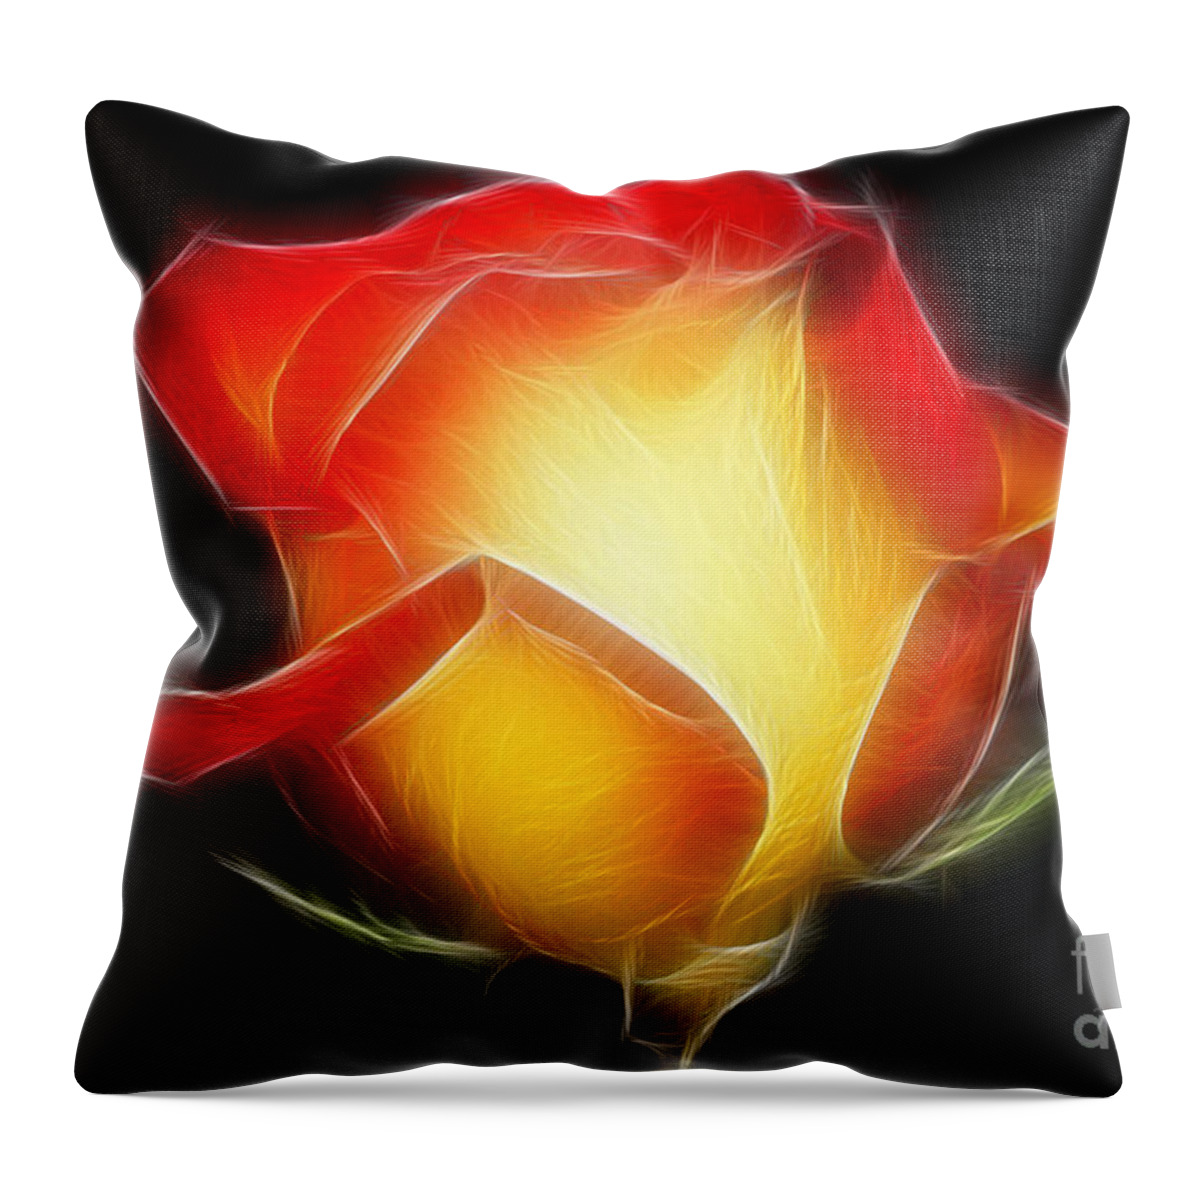 Flower Throw Pillow featuring the digital art Glow in The Dark by Teresa Zieba